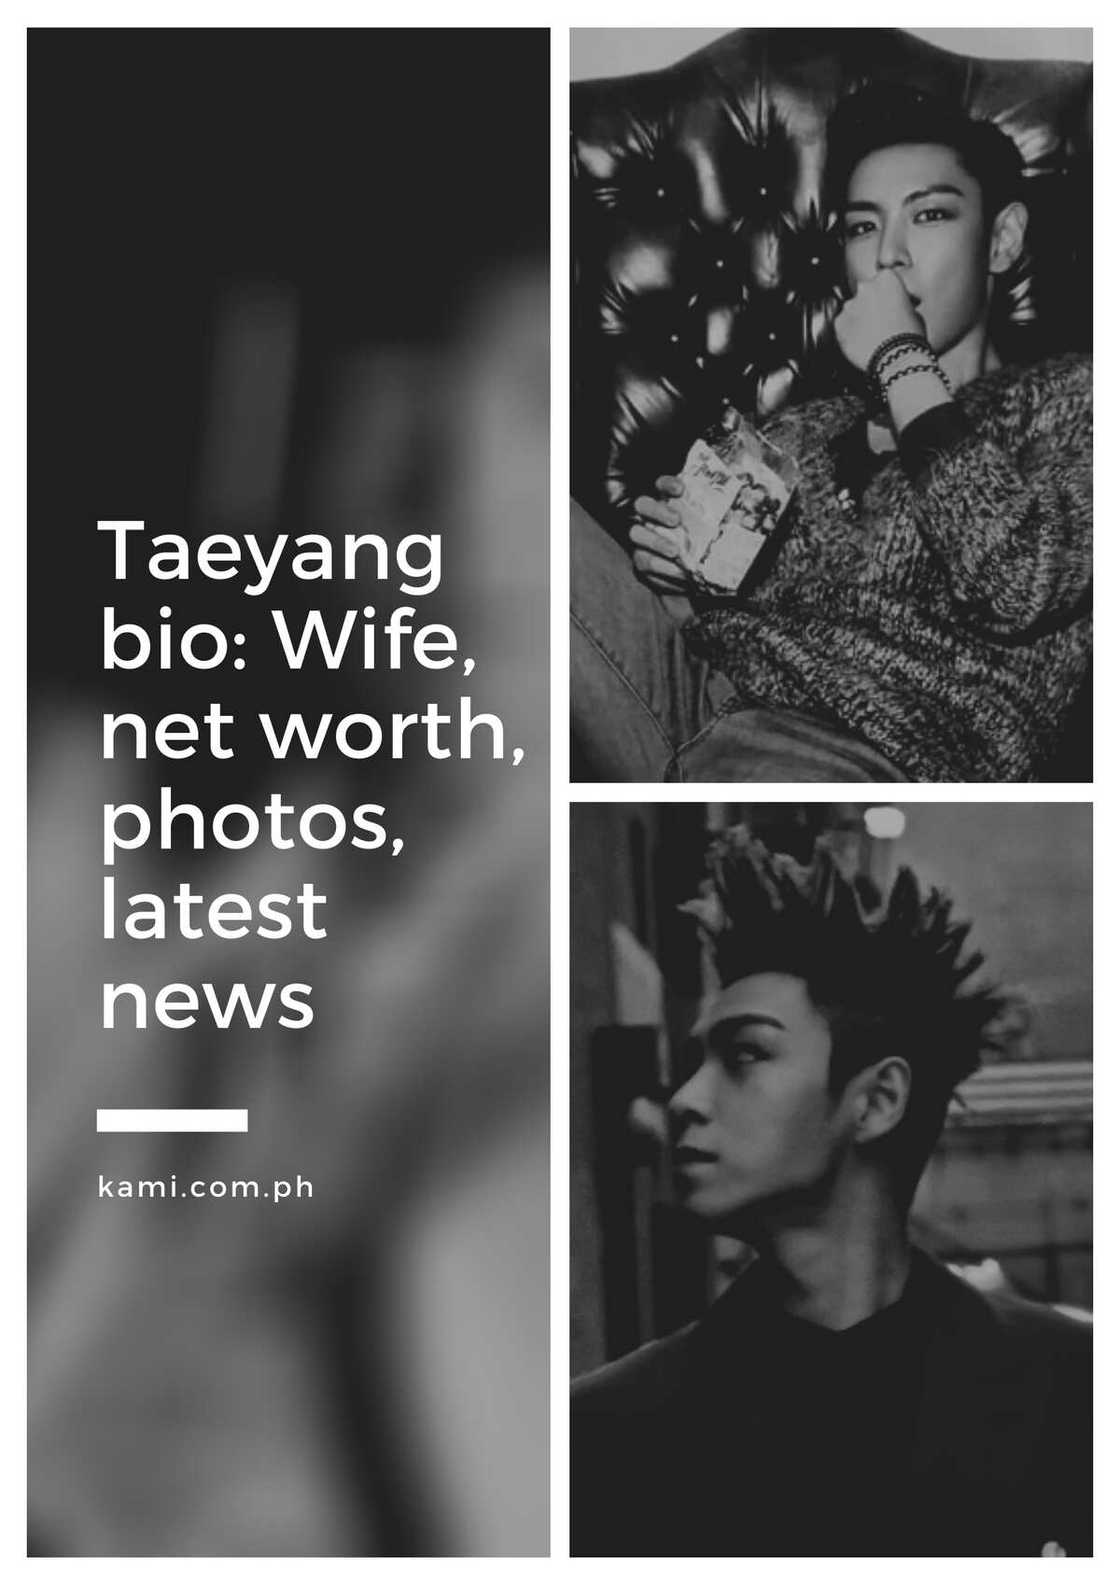 Taeyang bio: Wife, net worth, photos, latest news